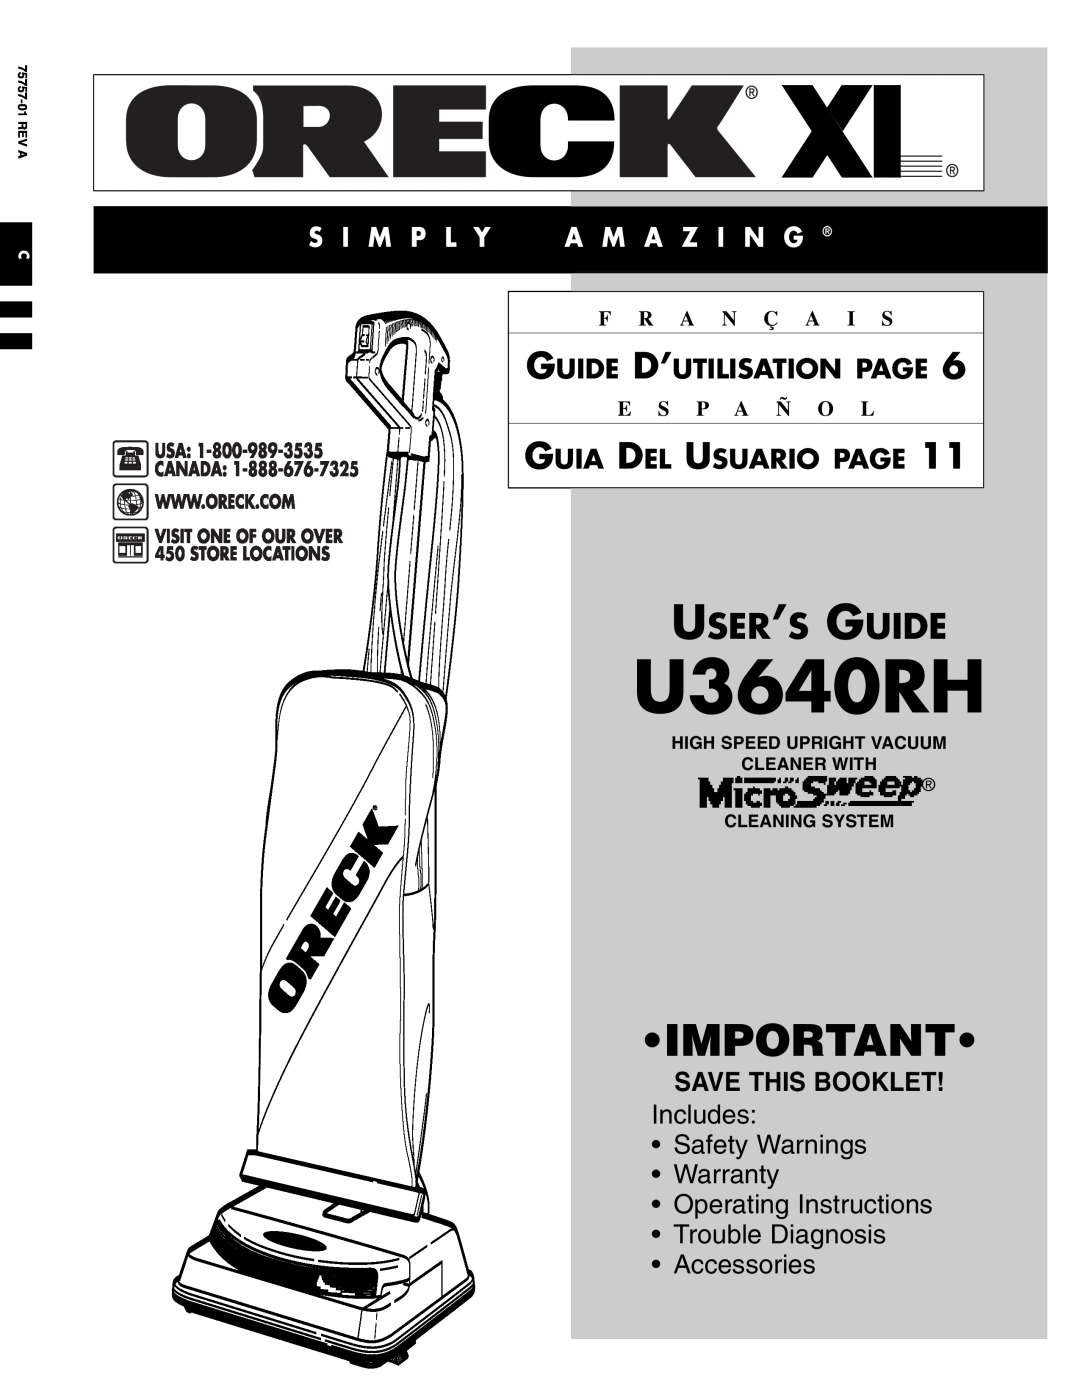 Oreck U3640RH warranty Guide D’Utilisation Page, Guia Del Usuario Page, F R A N Ç A I S, E S P A Ñ O L, User’S Guide 